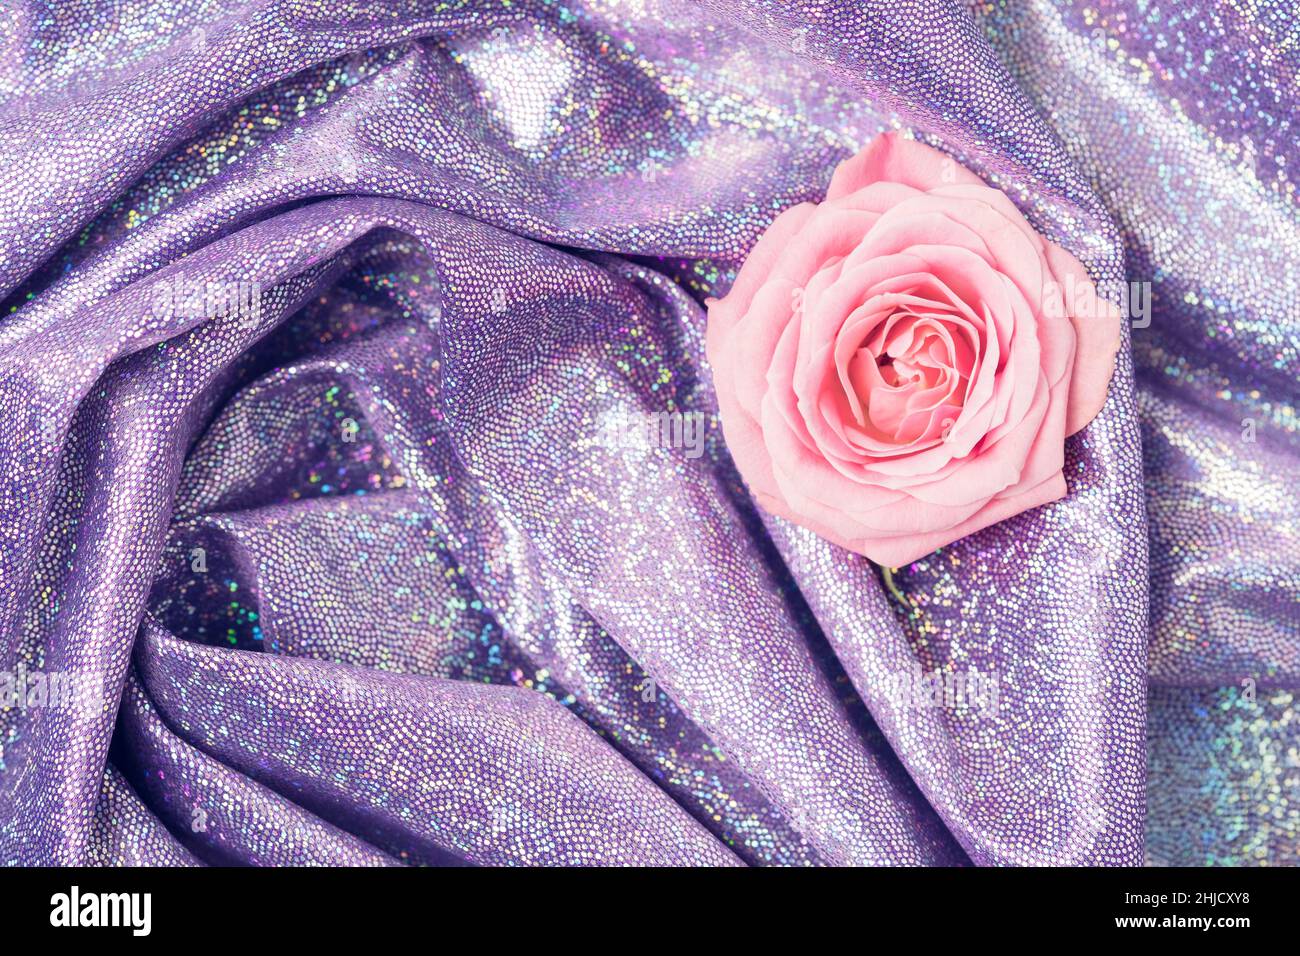 Violet glittering fabric with single pink rose. Retro futuristic, digital nature conceptual background. Stock Photo